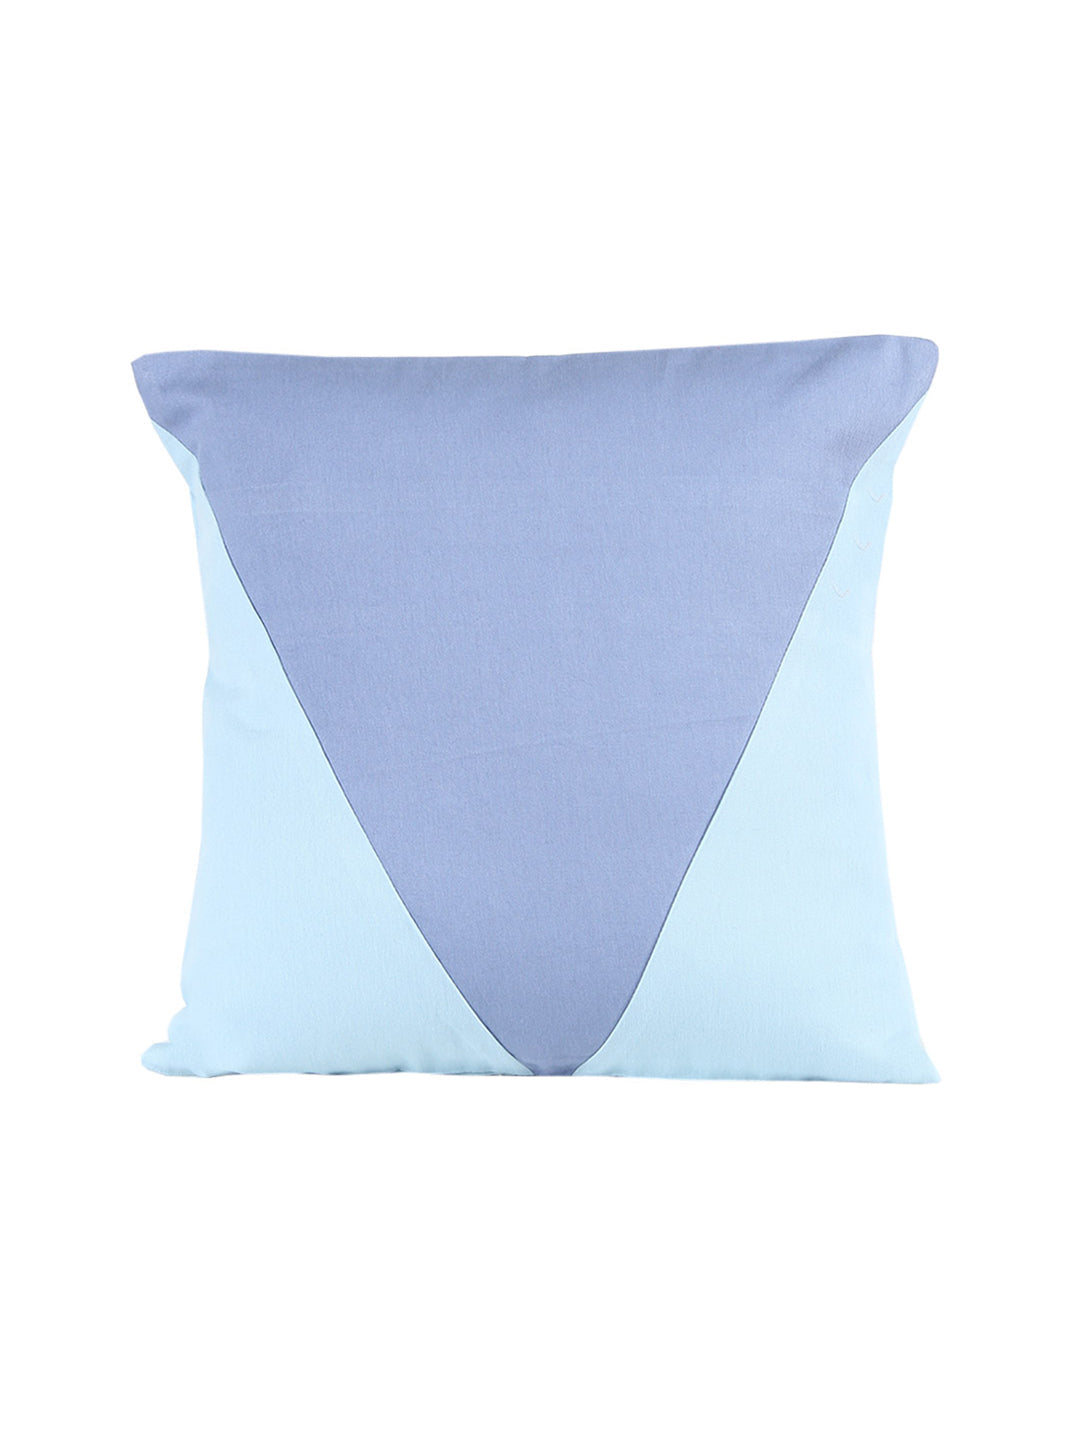 Bhumiti Cushion Cover (Blue)